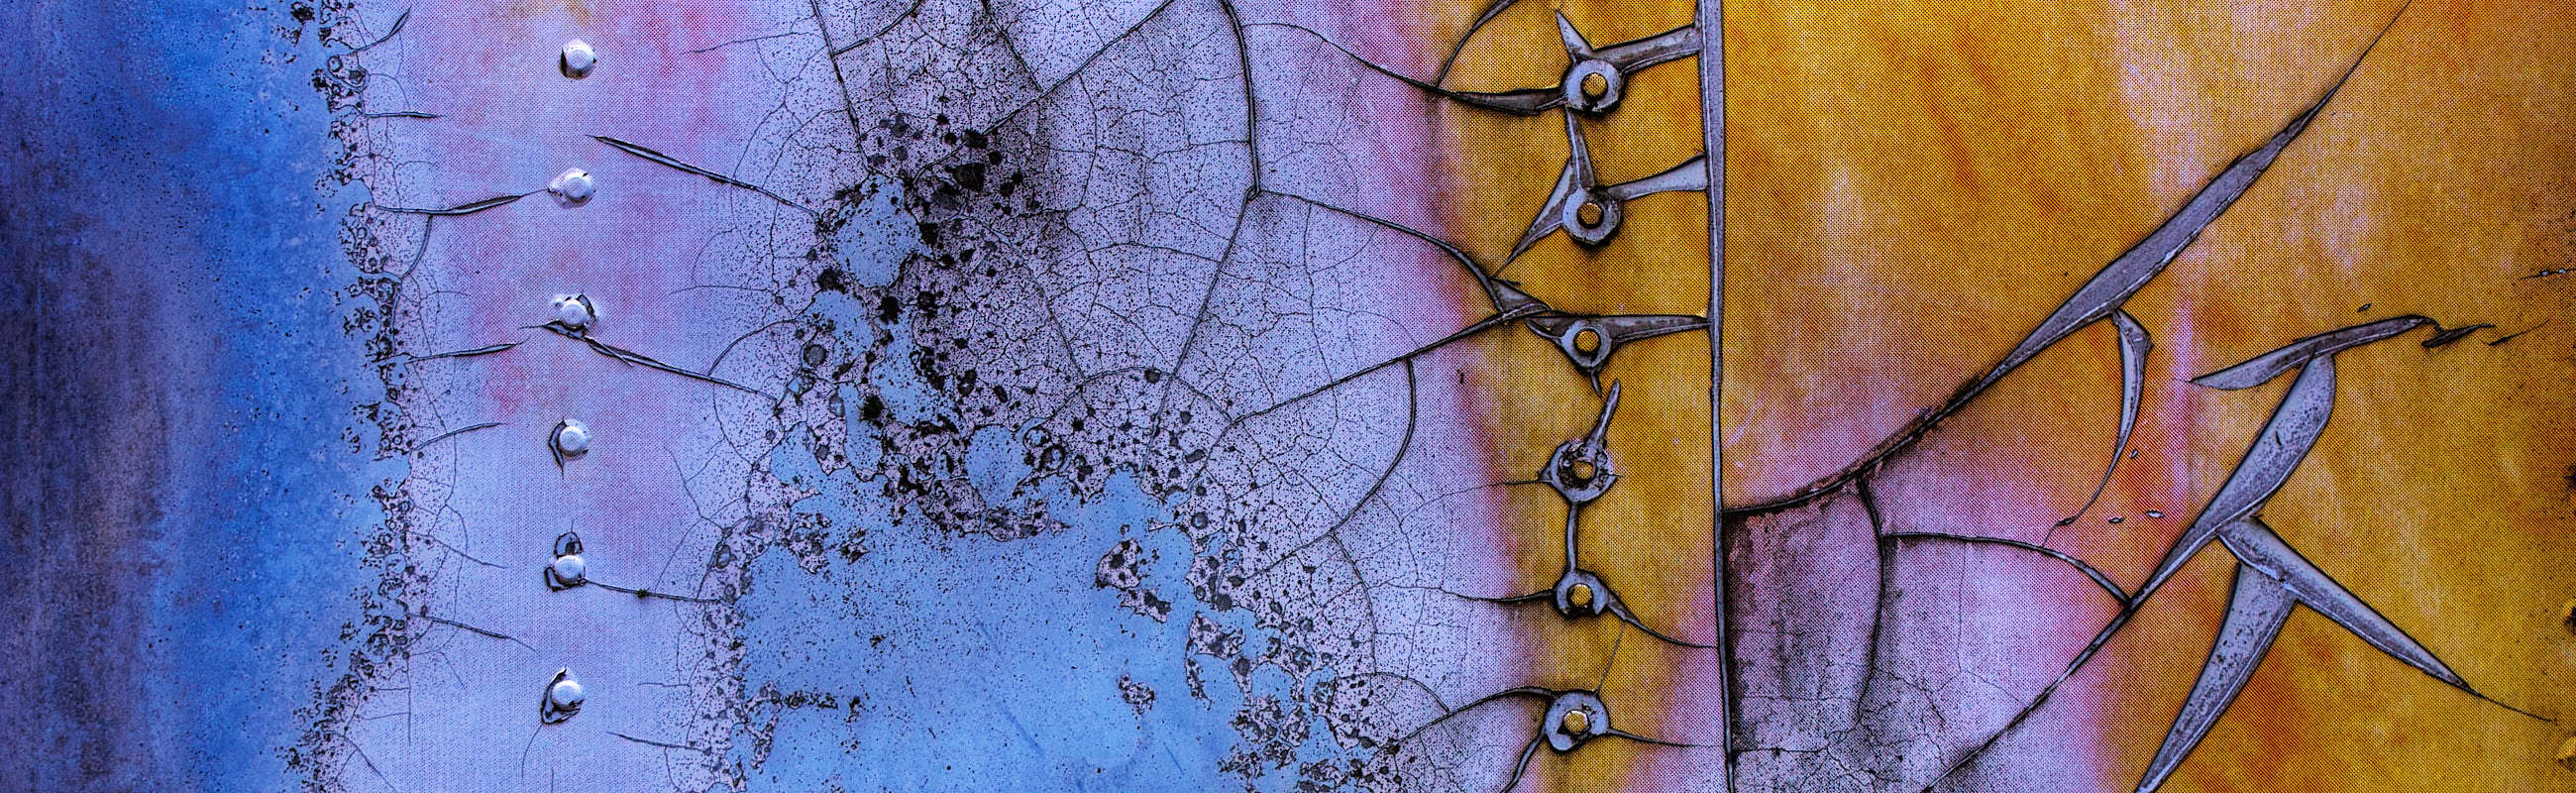 Abstract image of rusty metal side panel